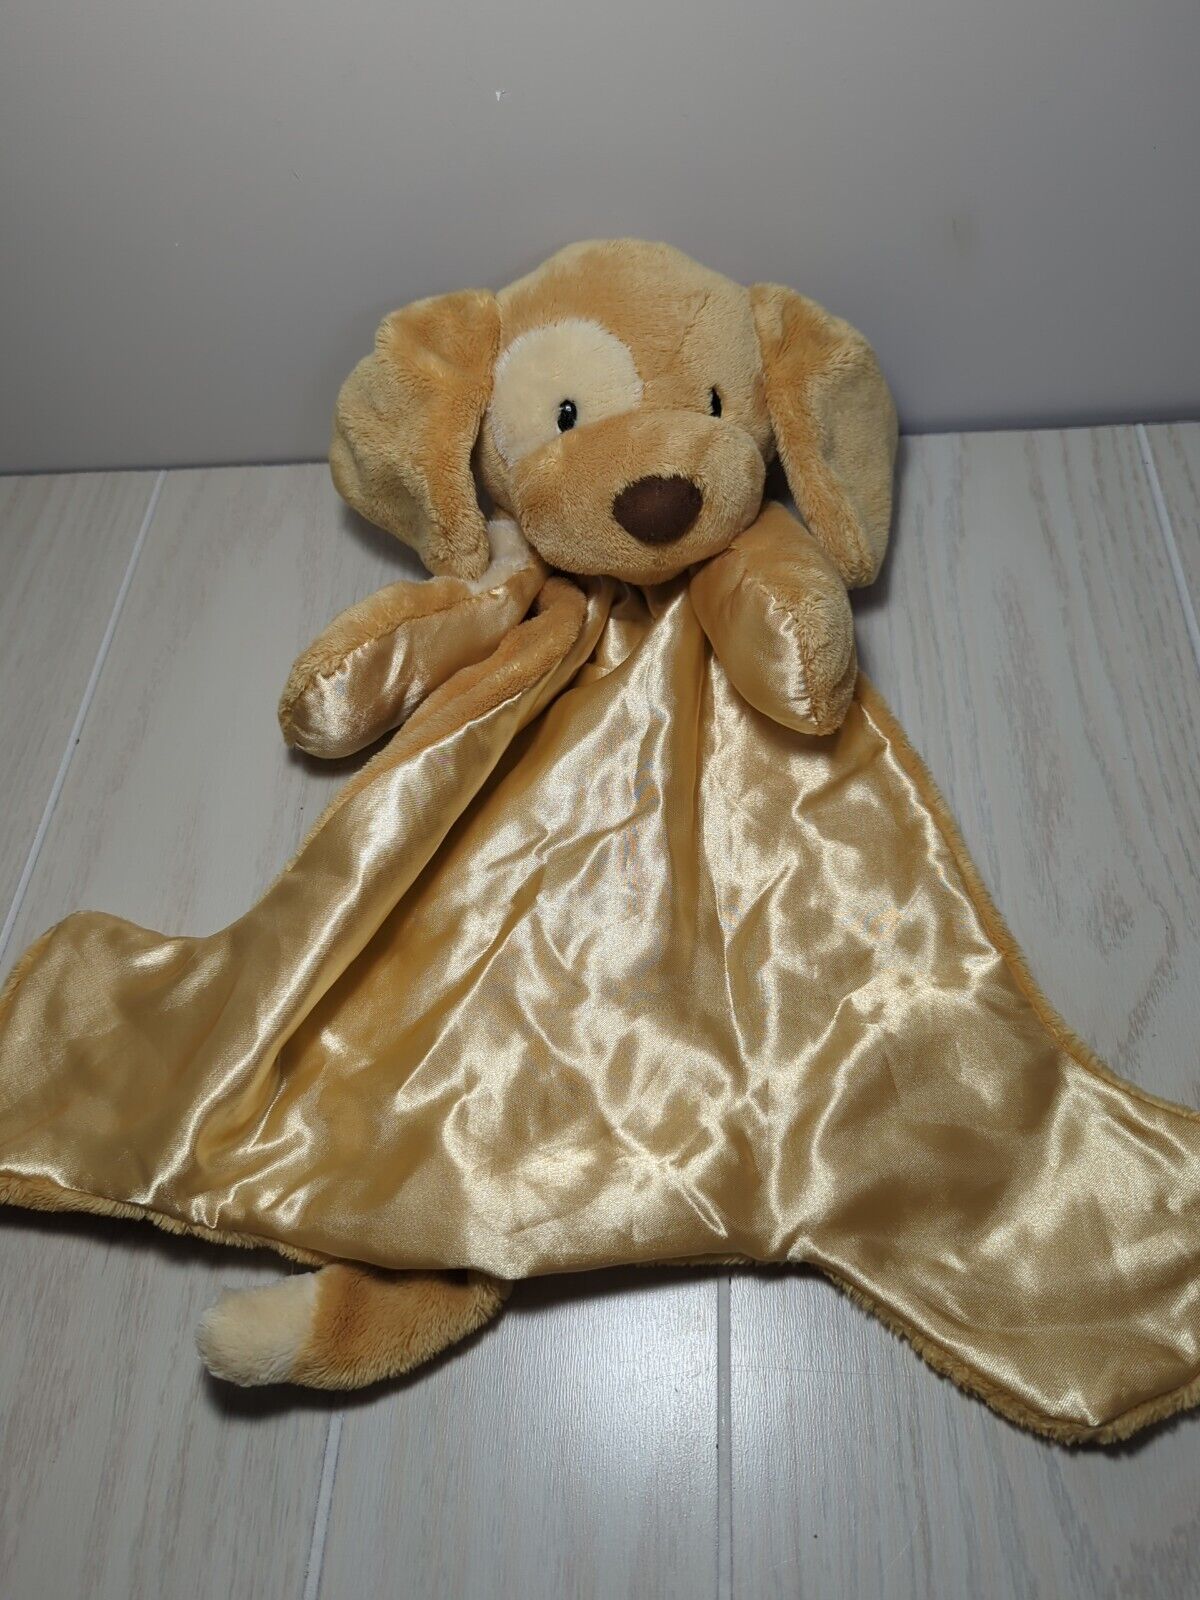 Primary image for Baby Gund Spunky Puppy Huggybuddy Plush Security Blanket tan 058968 beige lovey